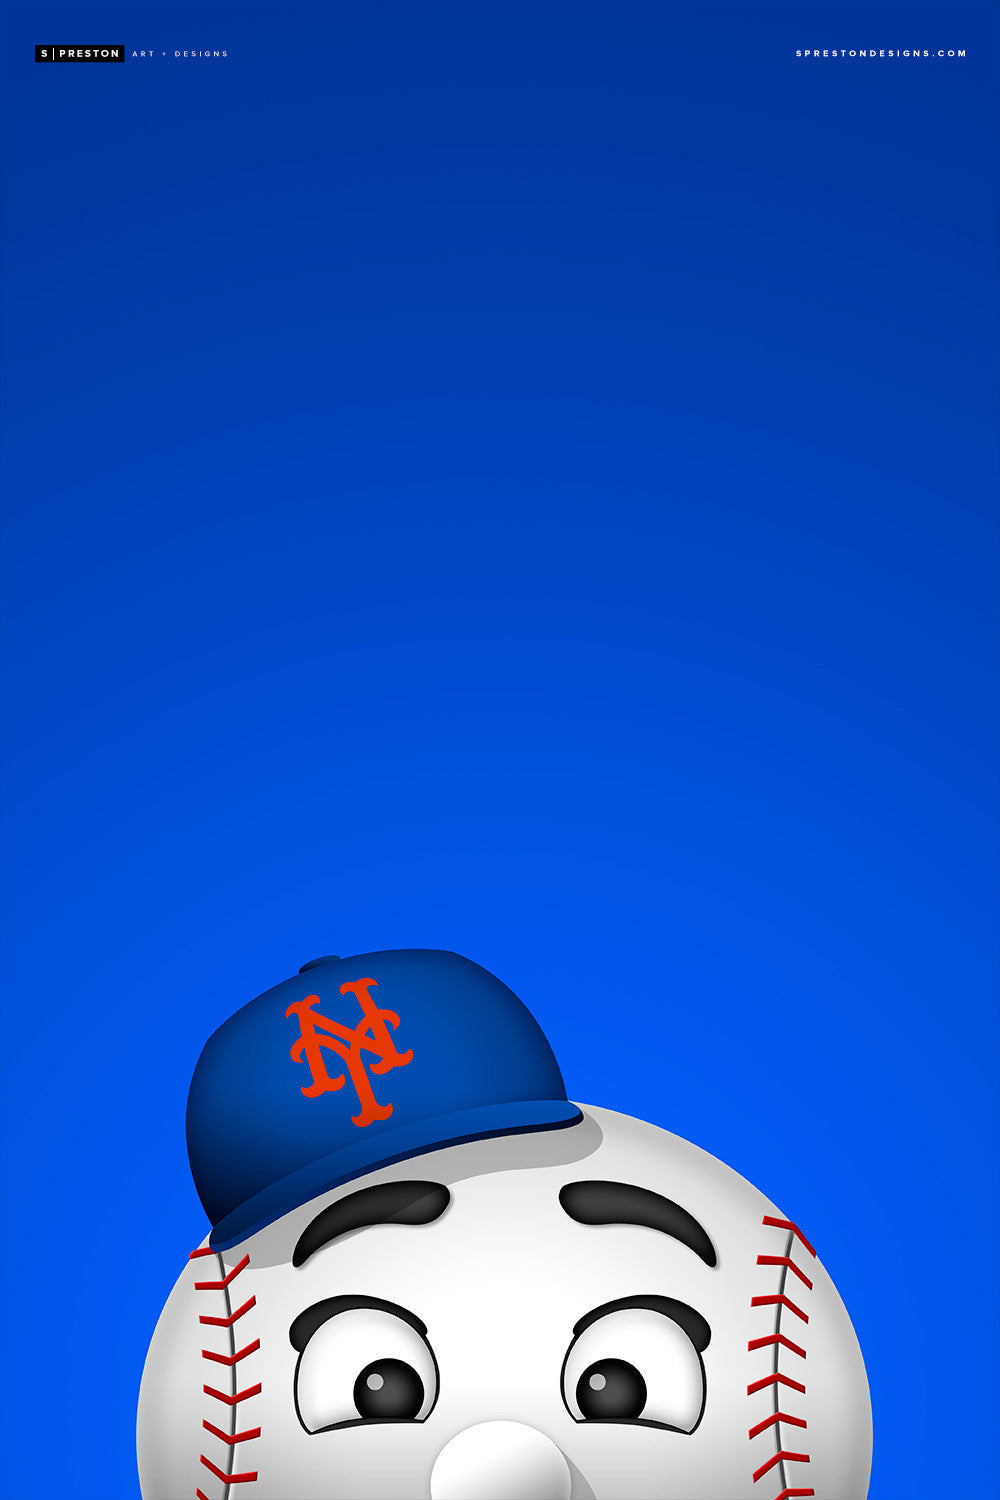 Play Ball! Mets Baseball Mascot Mr Met - New York Mets - Sticker